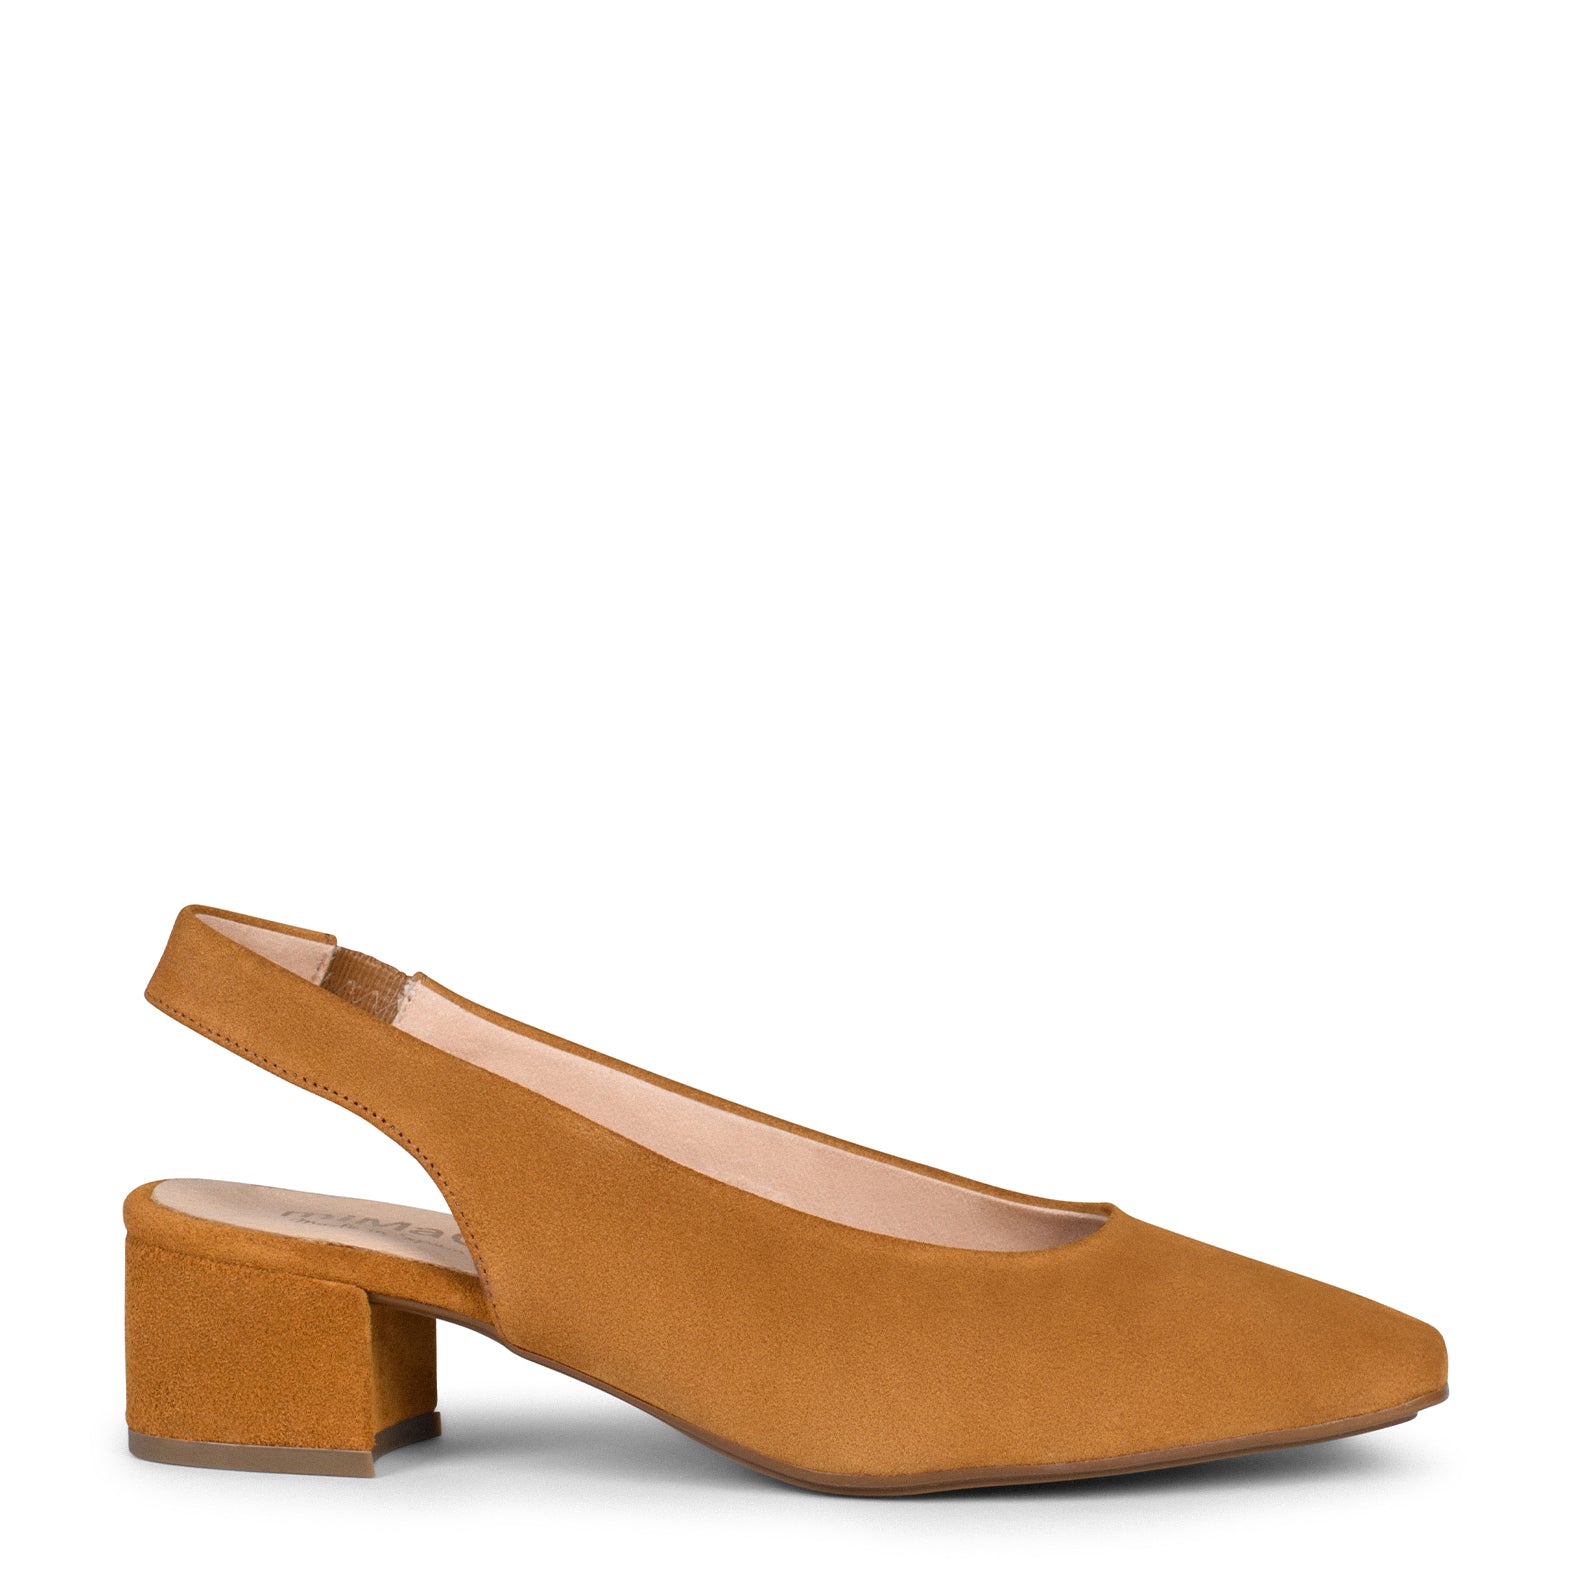 URBAN LADY – Zapatos de Tacón Destalonados CAMEL